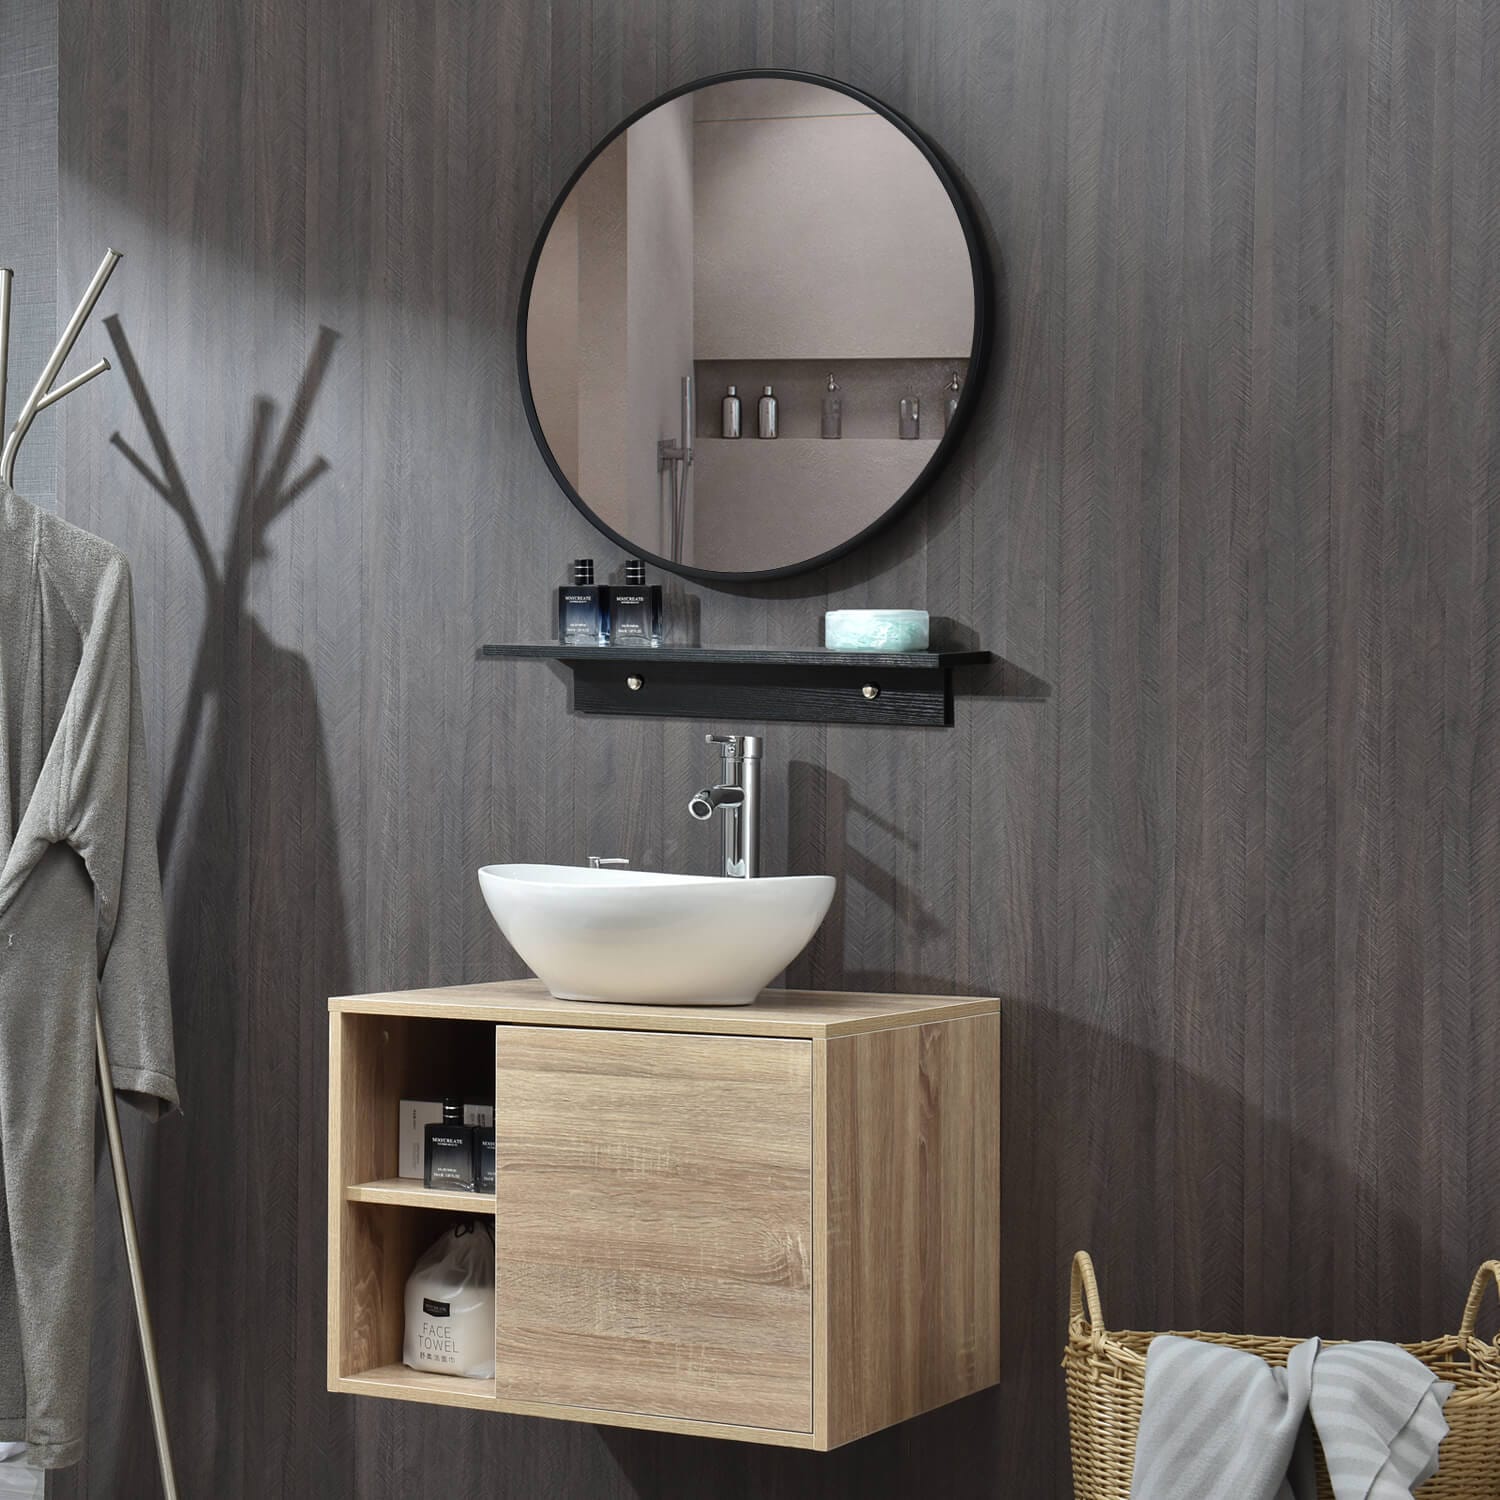 Elecwish Bathroom vanities 23.6" Modern Bathroom Vanity Cabinet With Round Mirror Wall-Mounted Side Shelf with sink display